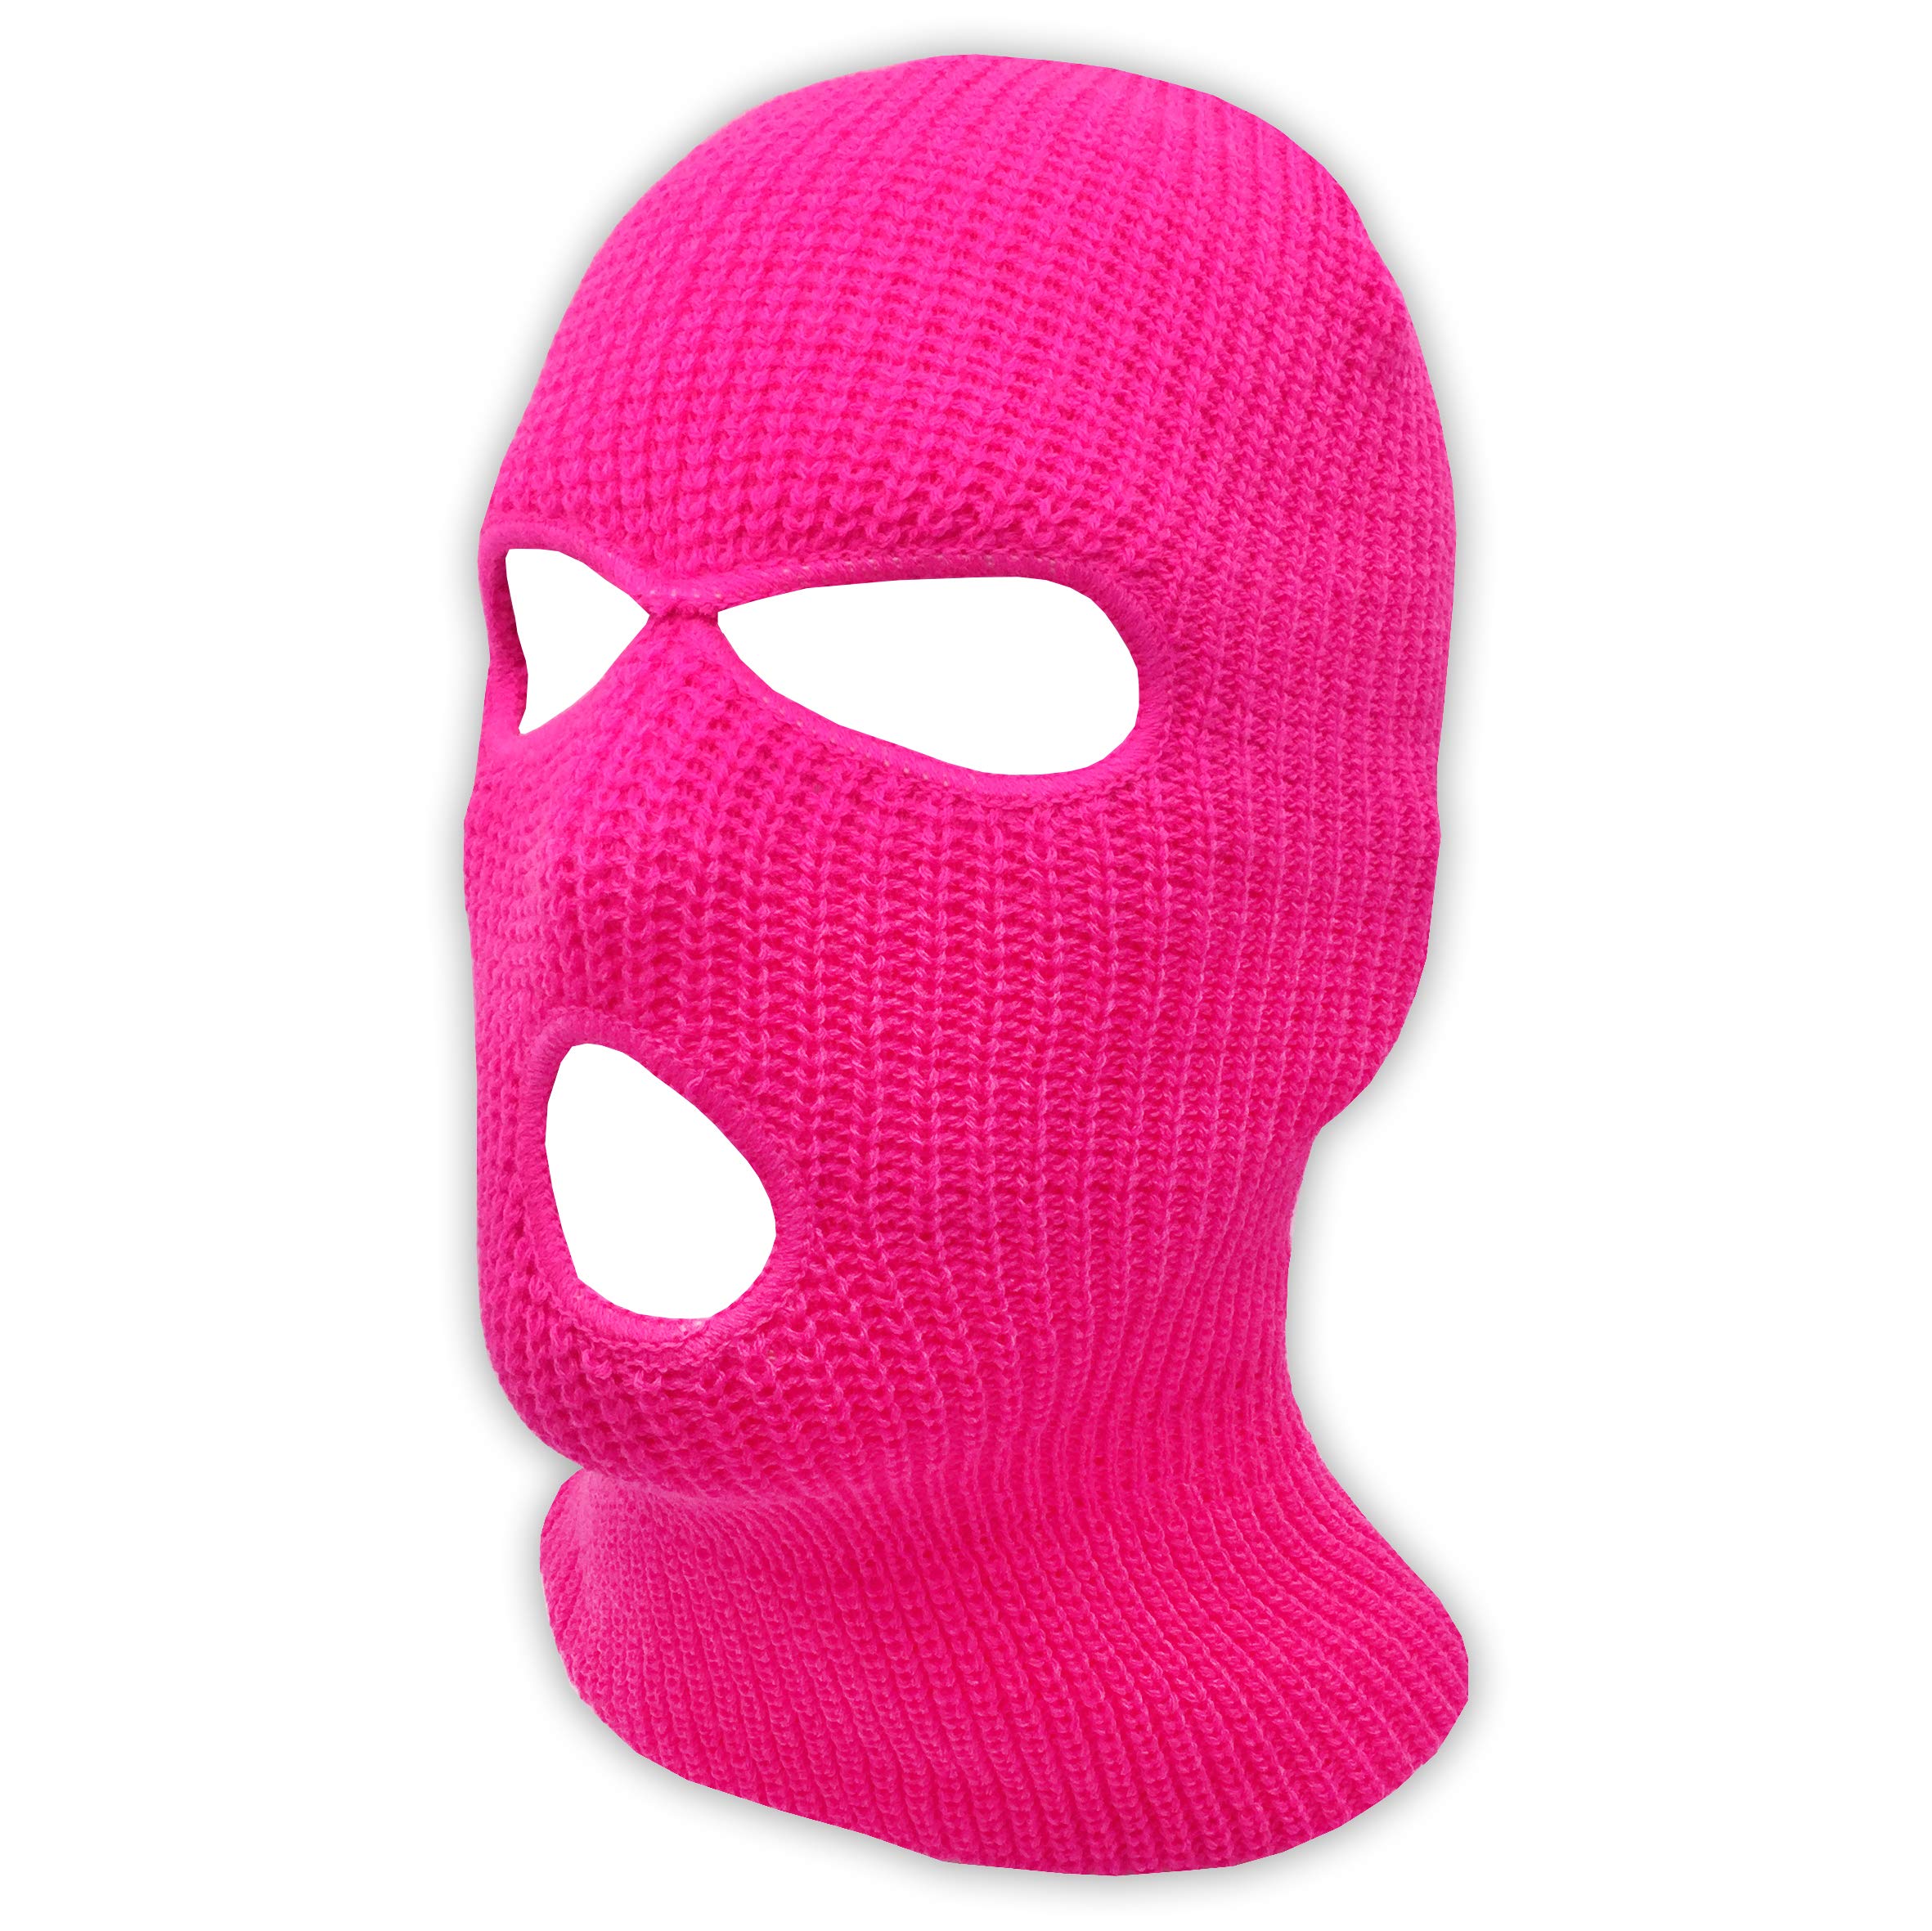 Hot Pink Ski Mask